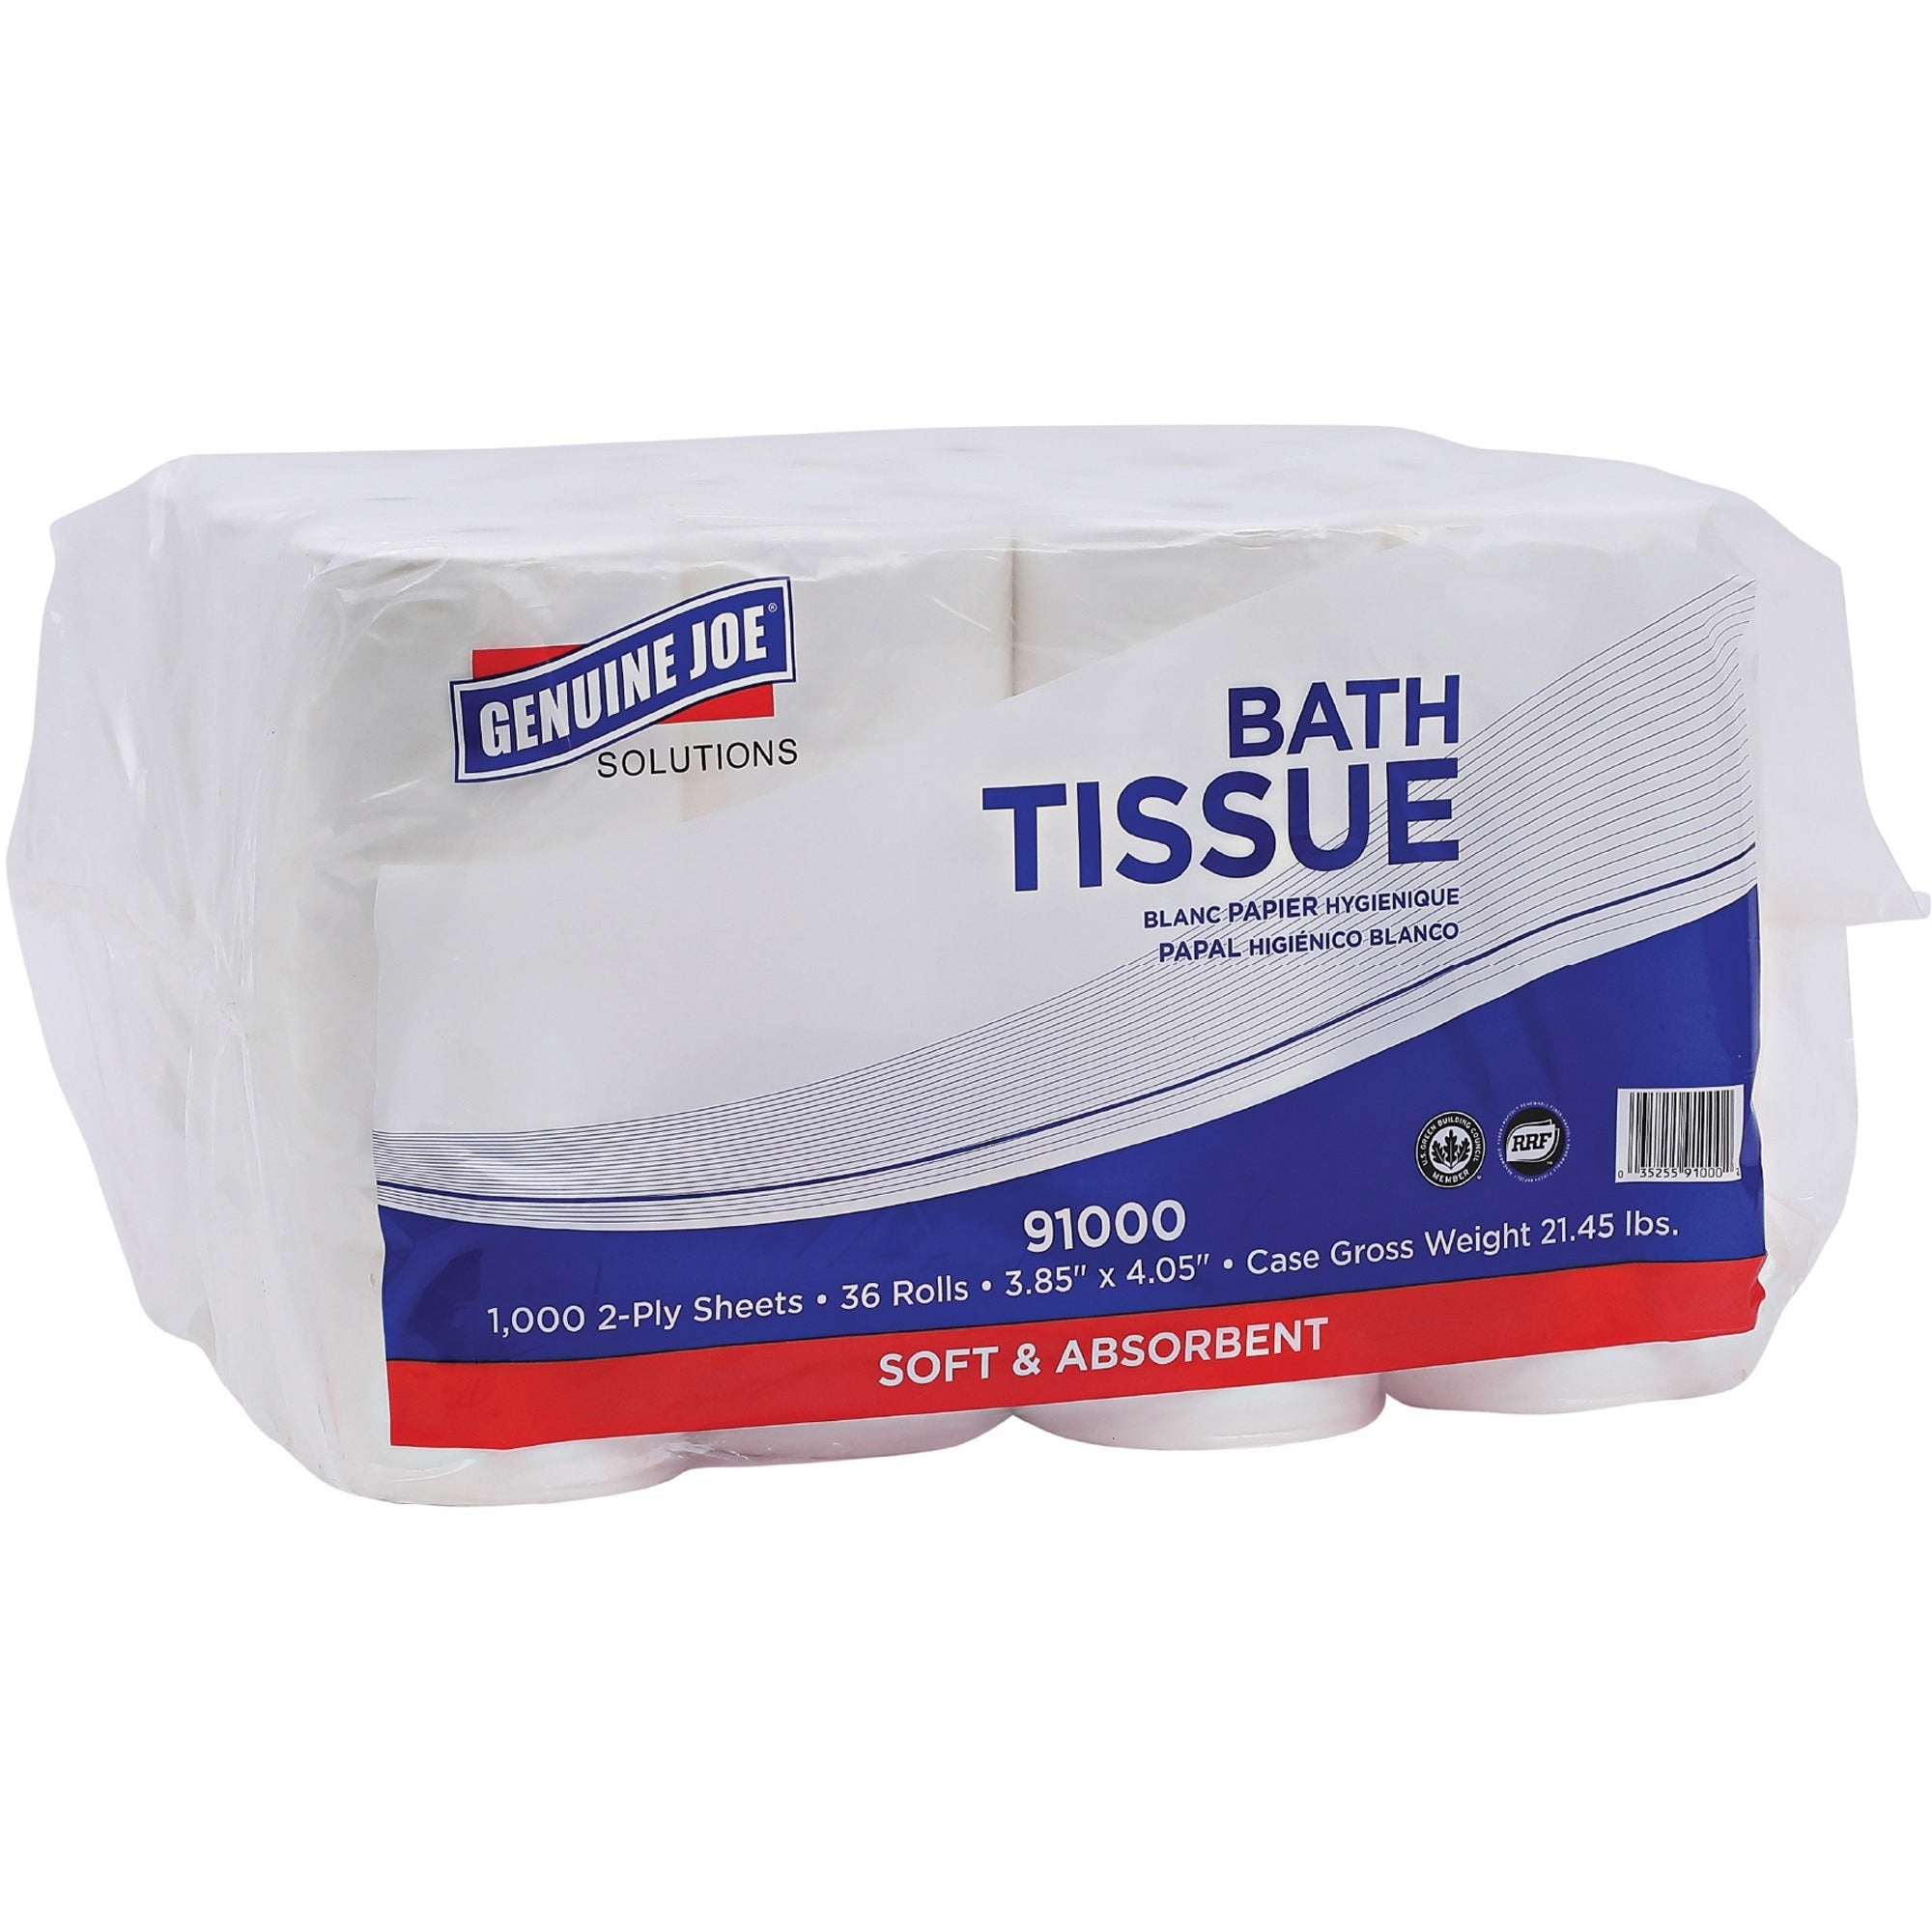 genuine-joe-solutions-double-capacity-bath-tissue-2-ply-1000-sheets-roll-071-core-white-virgin-fiber-embossed-chlorine-free-for-bathroom-36-carton_gjo91000 - 3